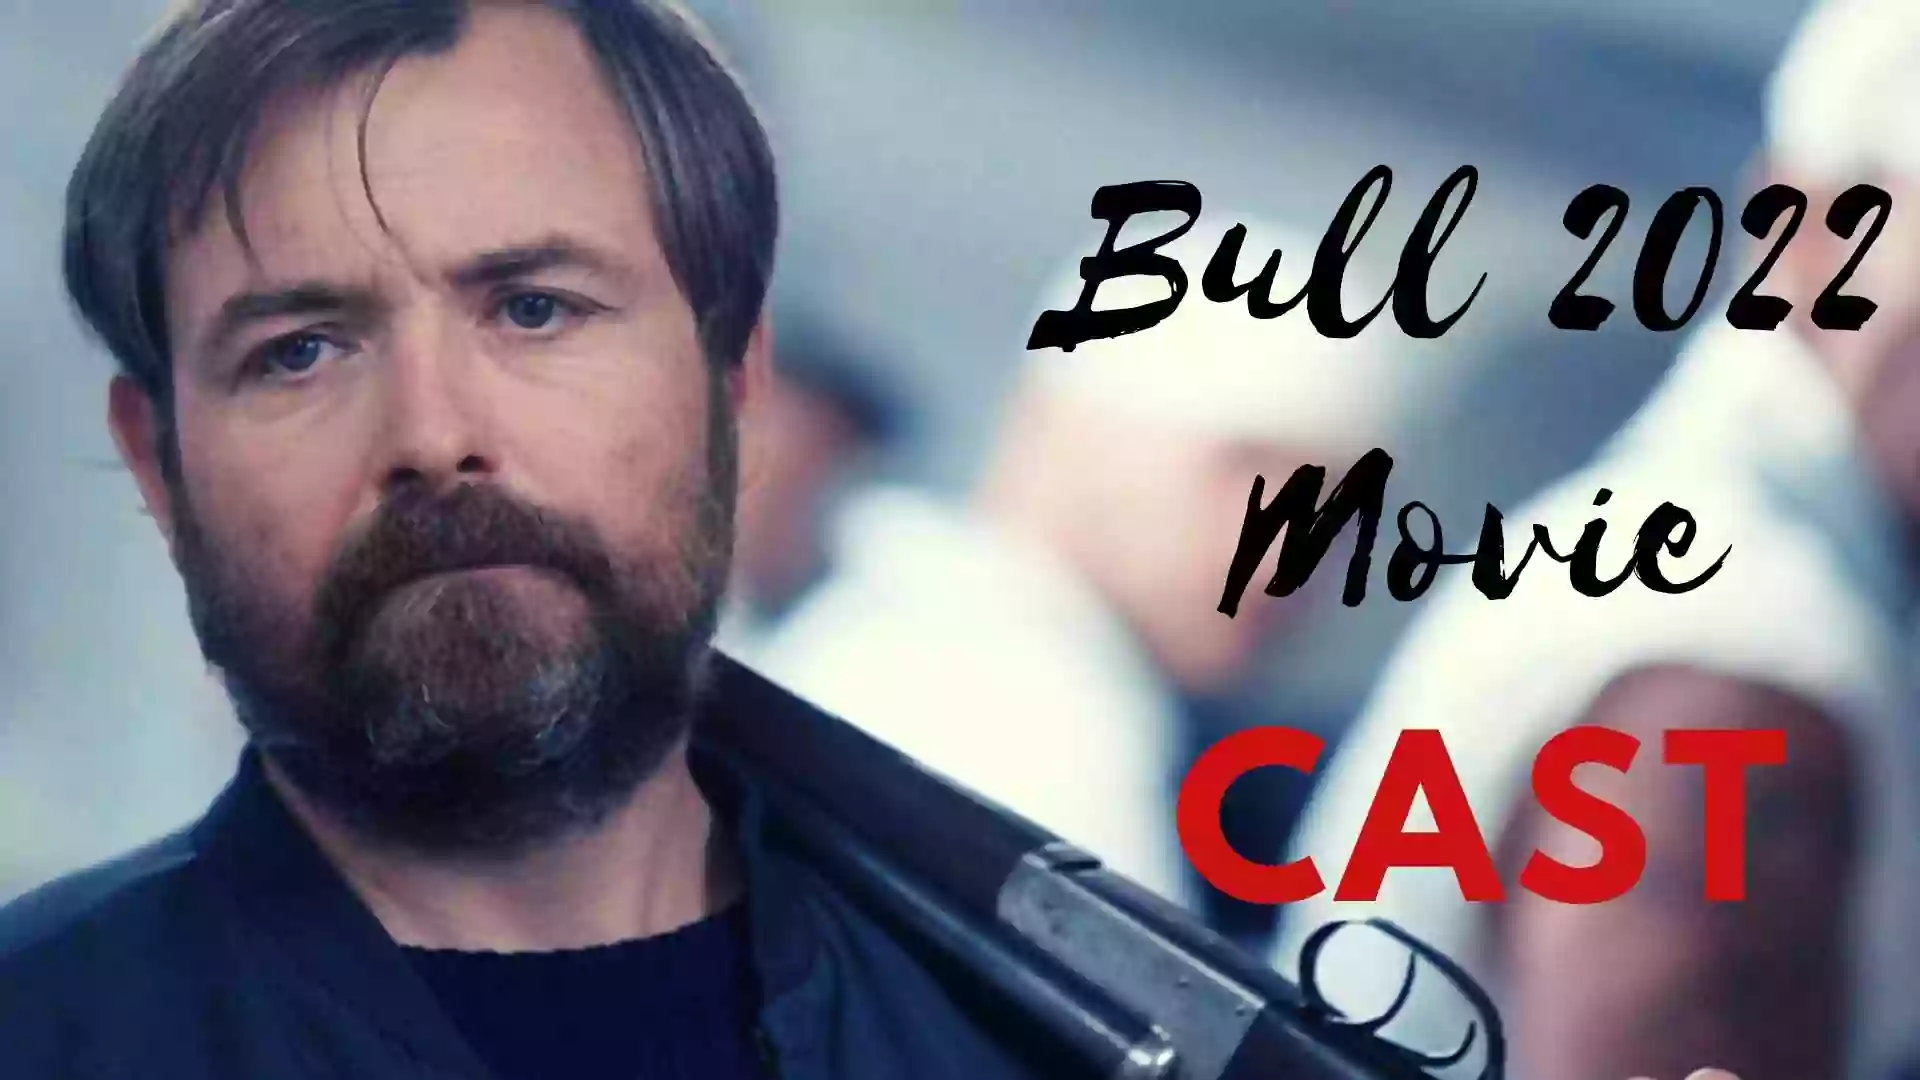 Bull Cast | Bull 2022 Movie Cast